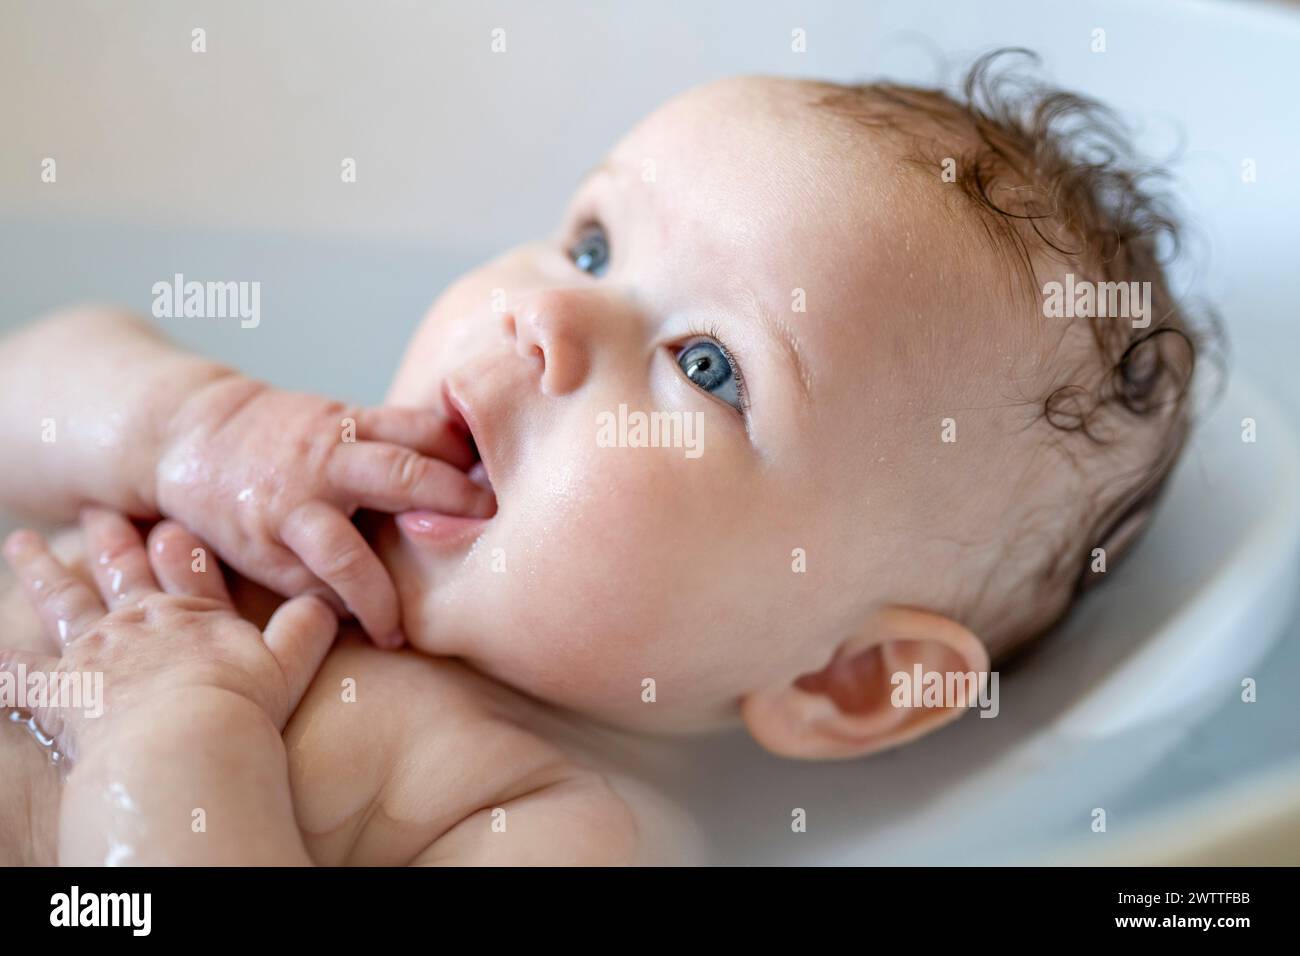 Baby enjoying bath time with a curious gaze. Stock Photo